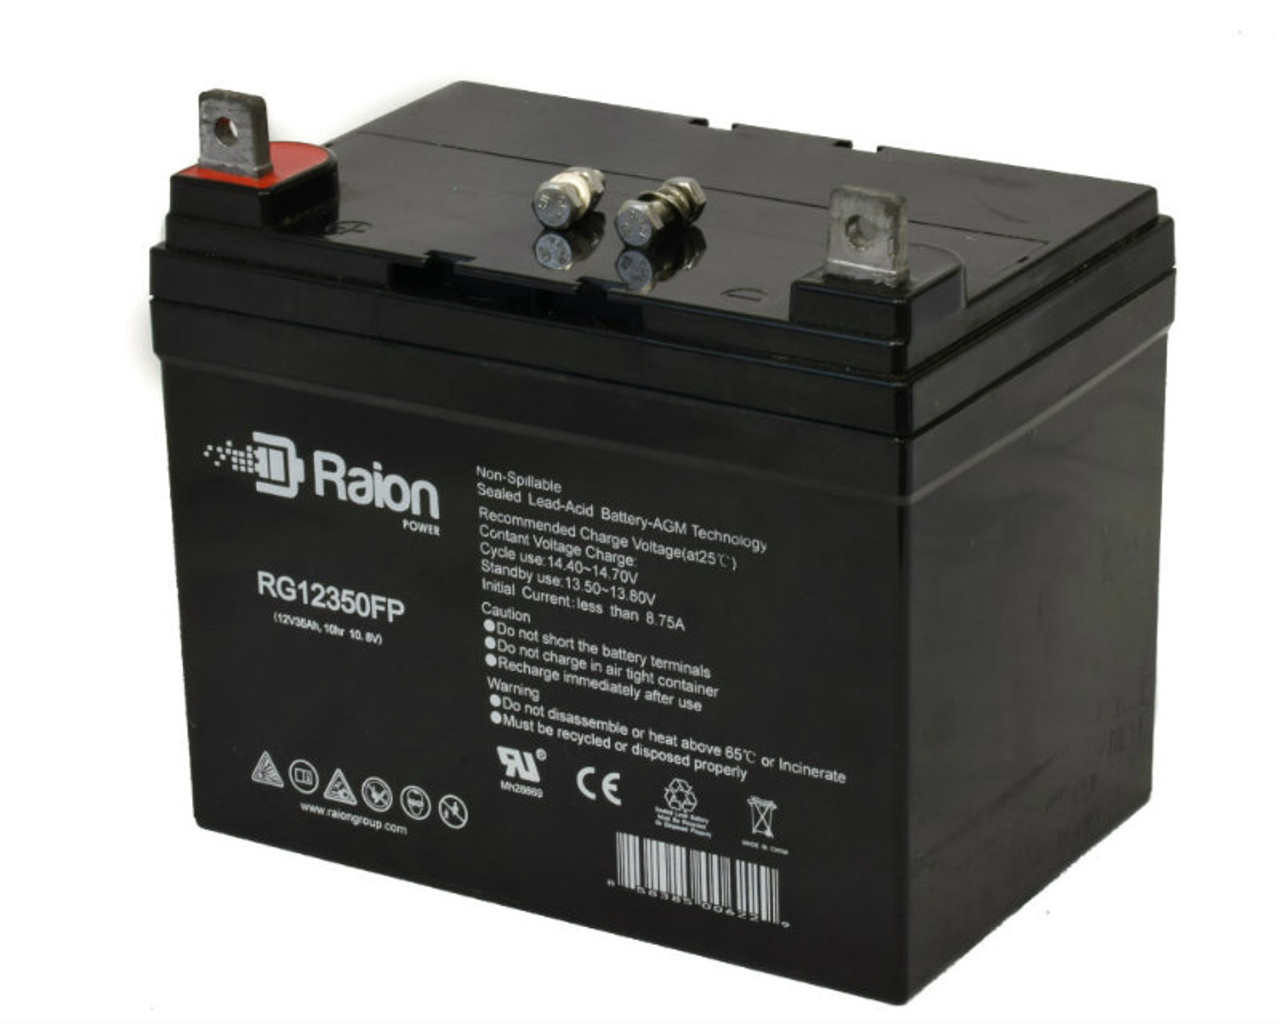 Raion Power Replacement 12V 35Ah RG12350FP Battery for Bosfa EVX12-33